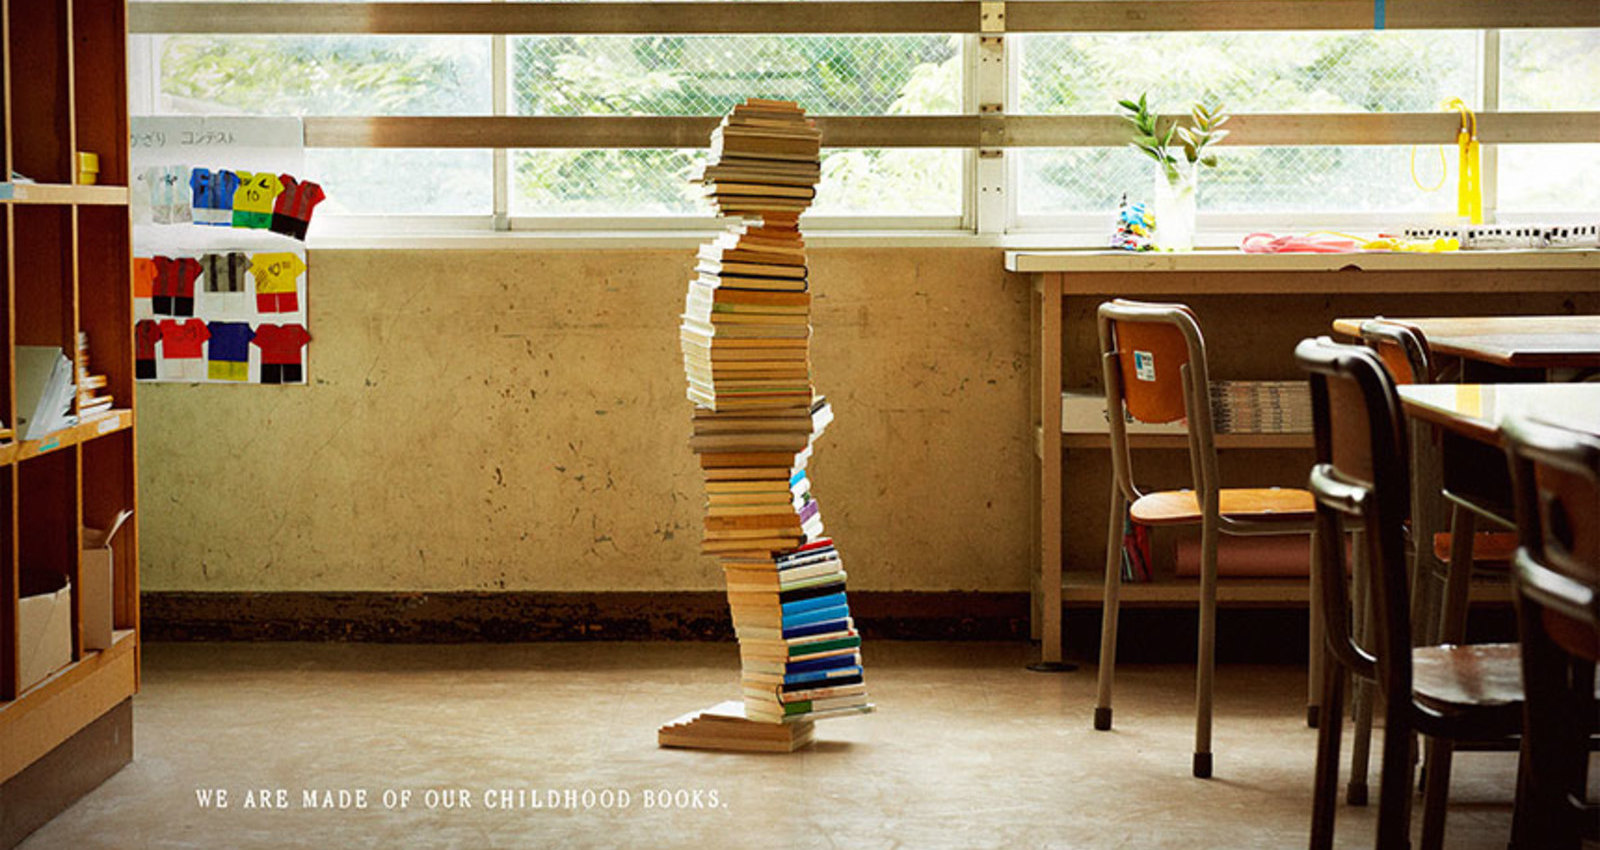 Books build children.